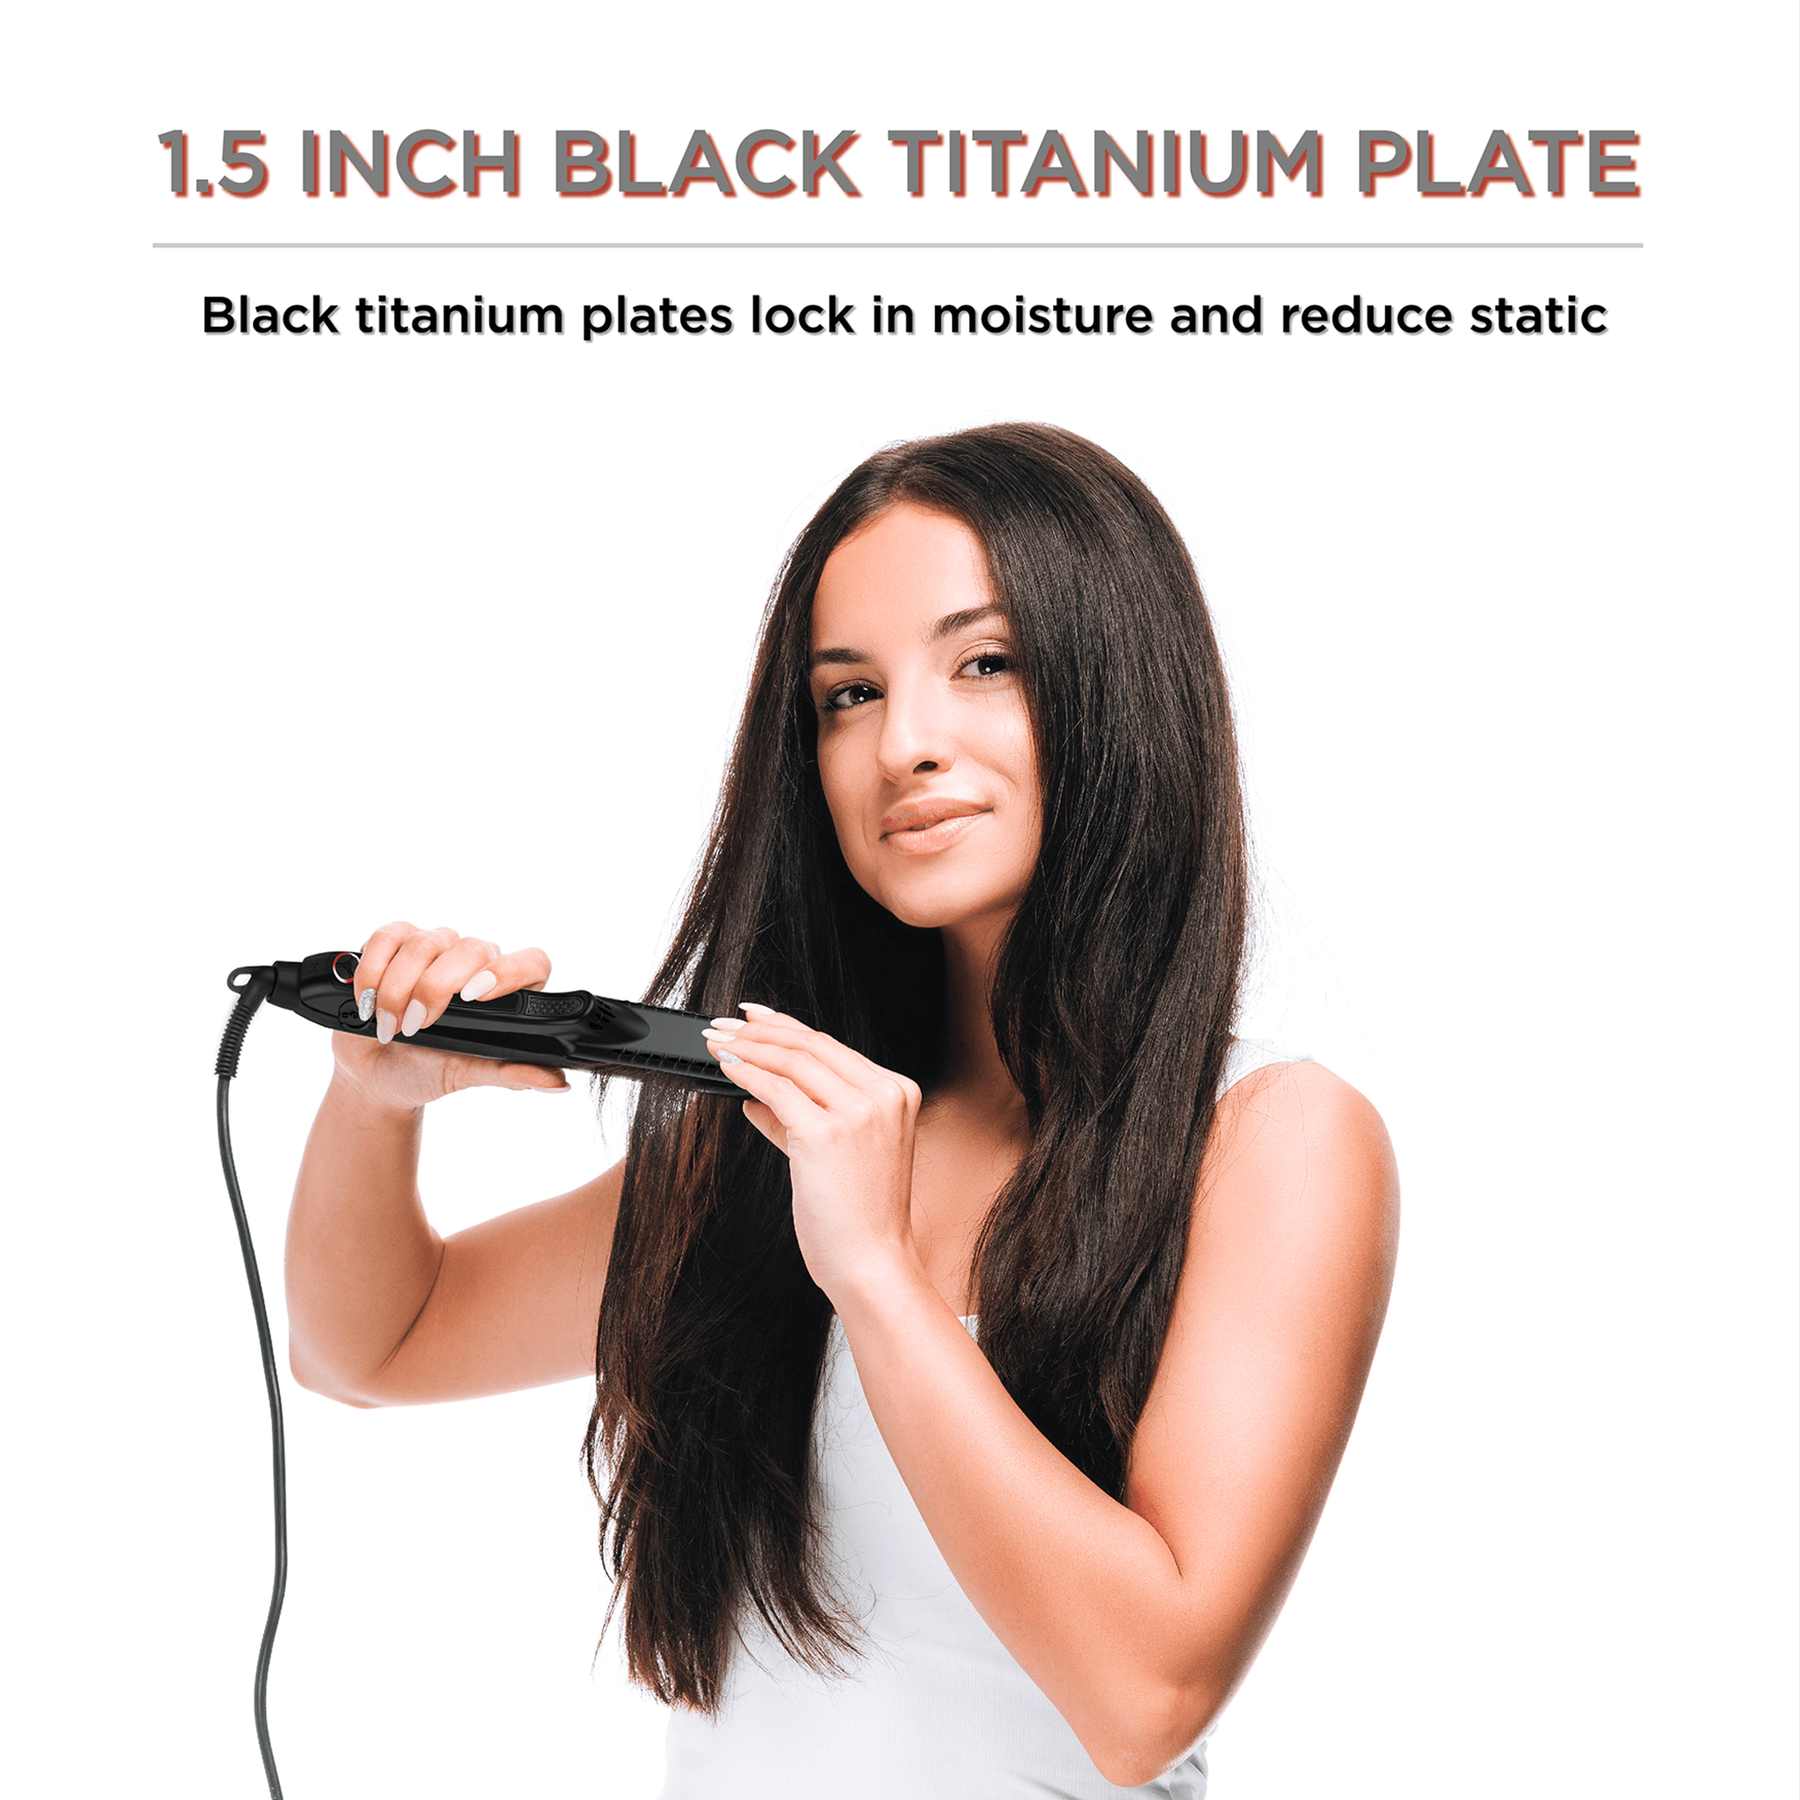 CROC CROC1-RBB Classic Nano Titanium Flat Iron 450 Degrees - Black  759894544779